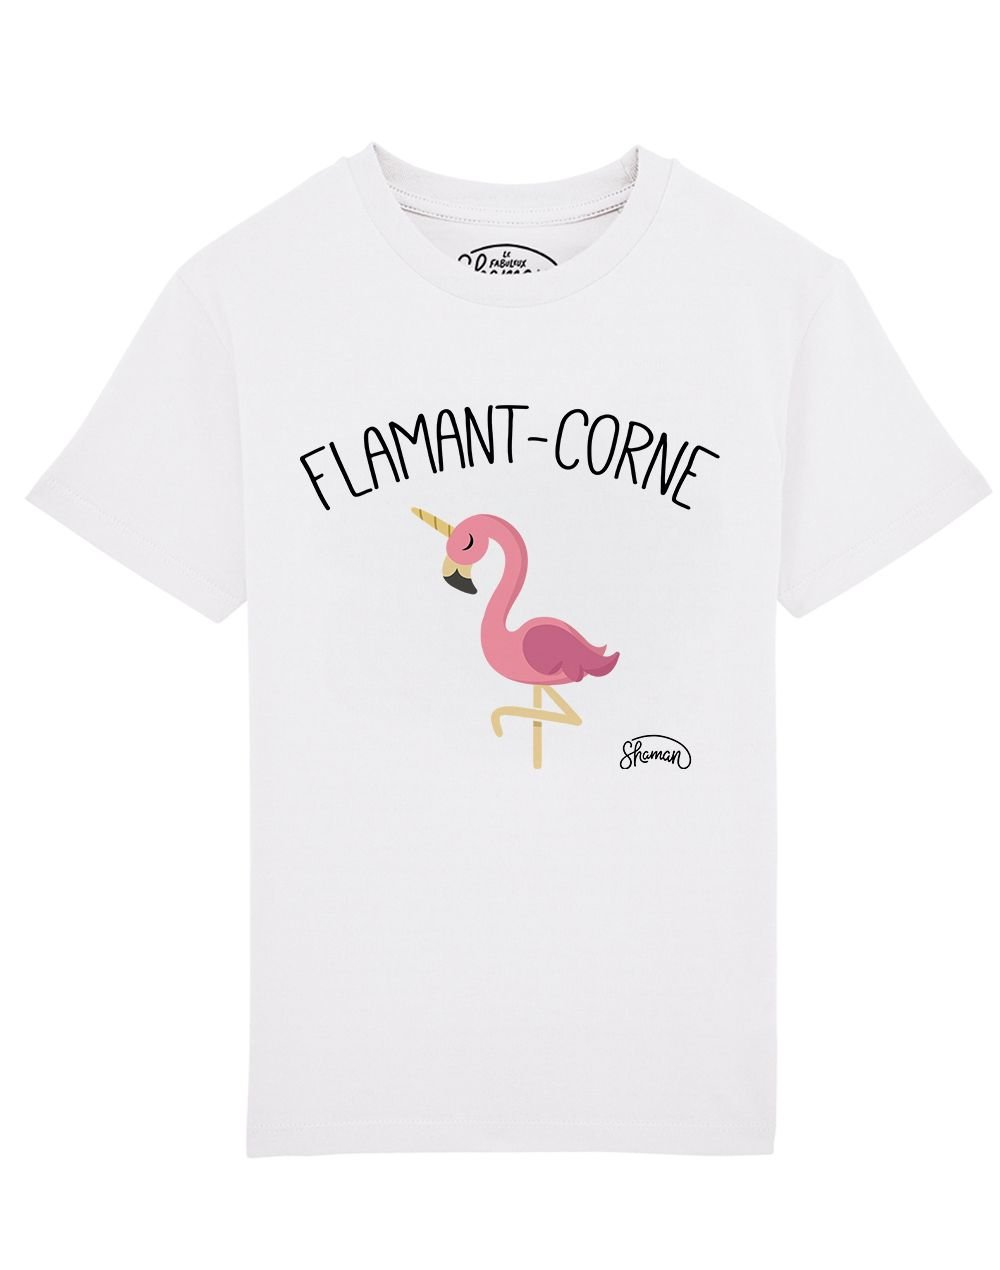 Tee shirt Flamant corne